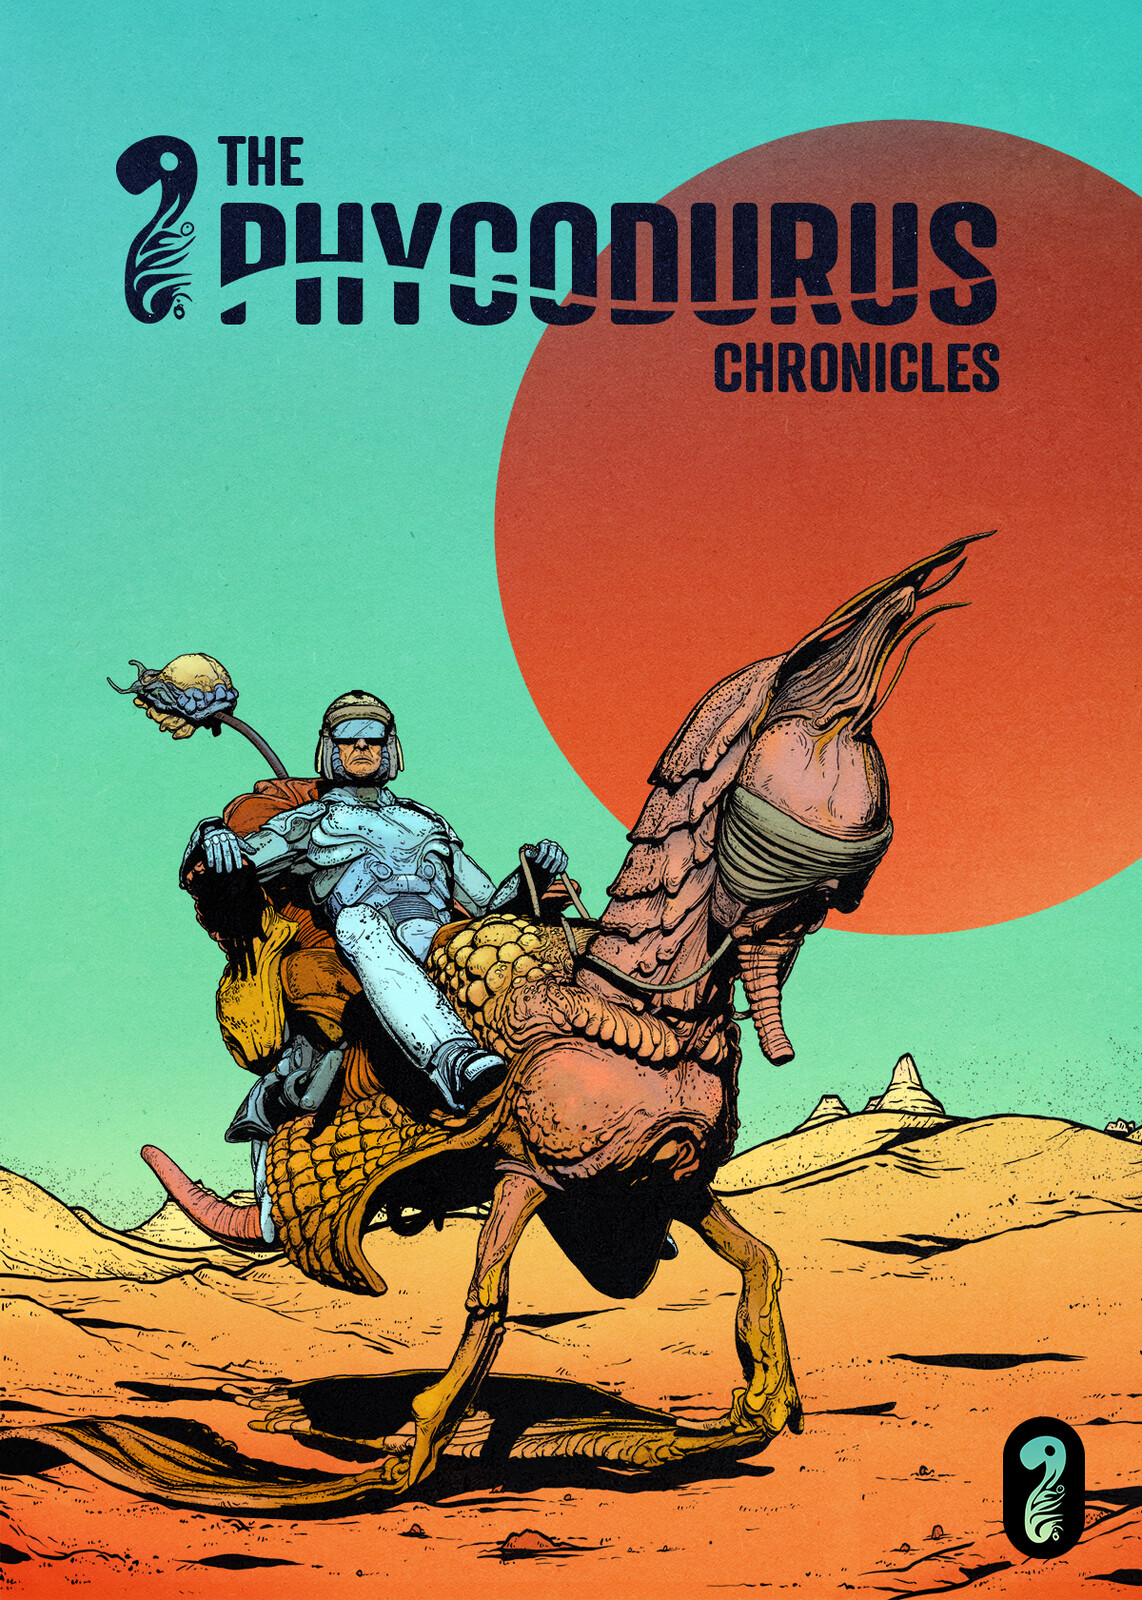 Phycodurus comic book cover